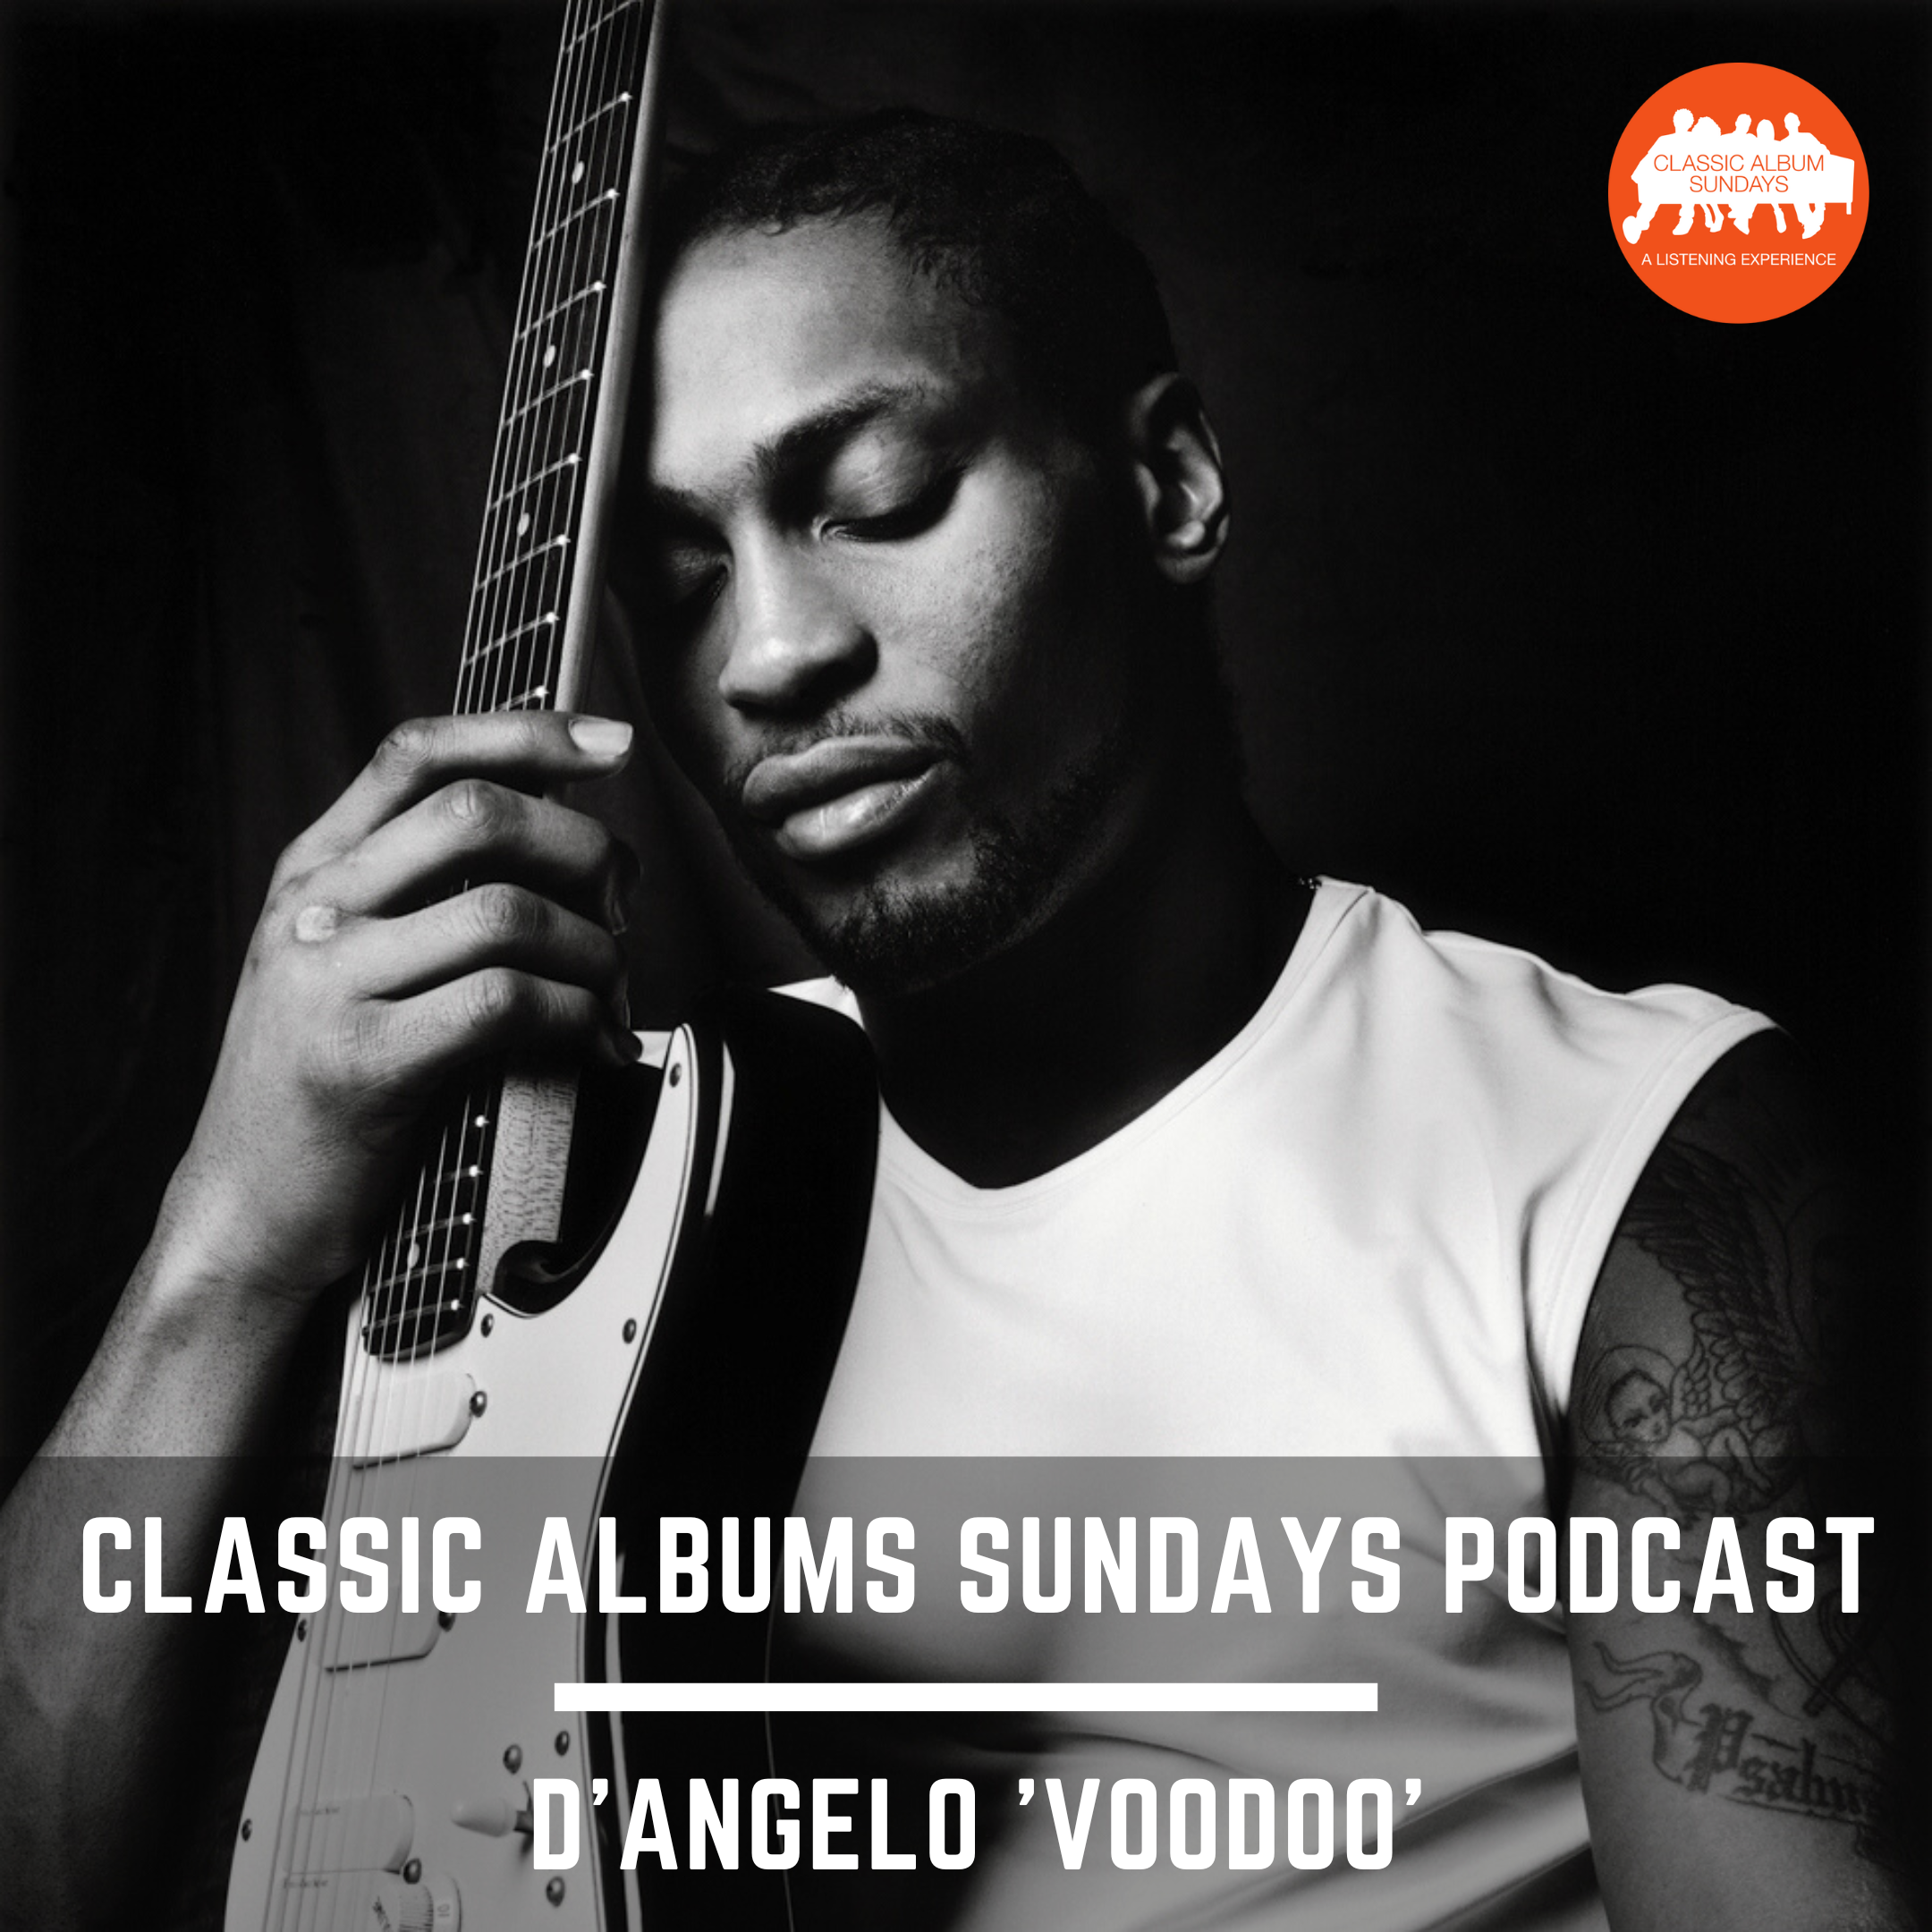 Classic Album Sundays Podcast: D’Angelo ’Voodoo’